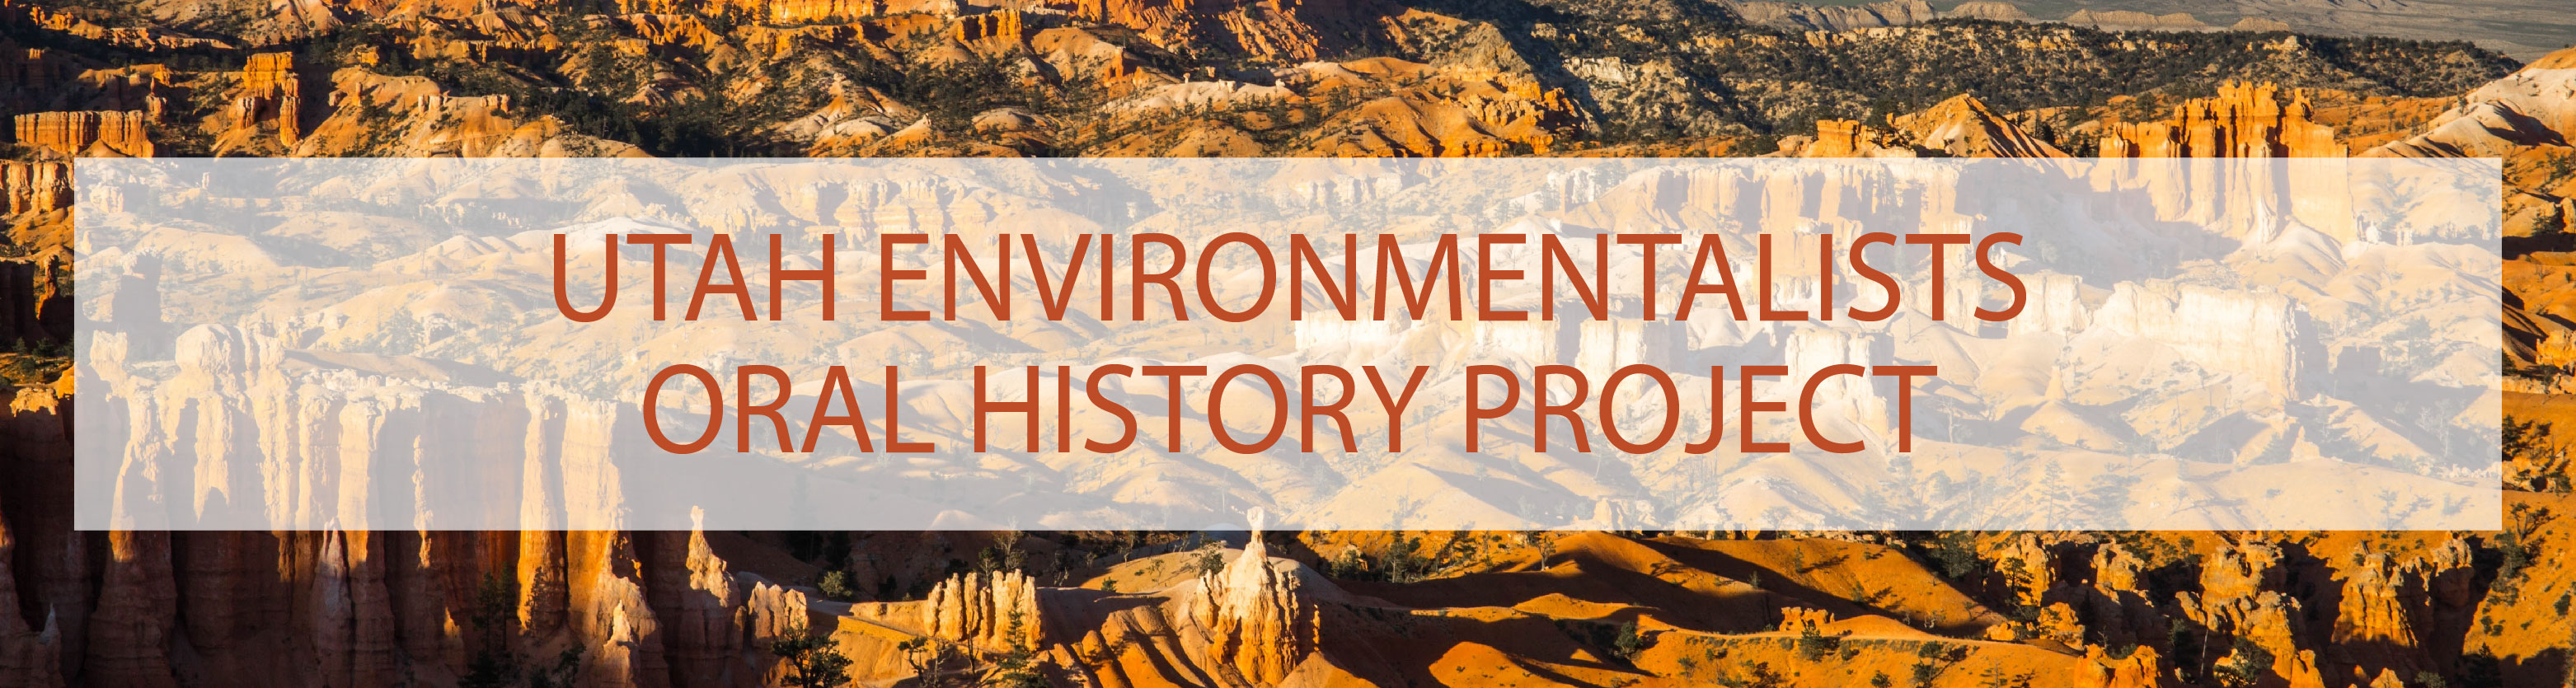 Utah Environmentalists Oral History Project